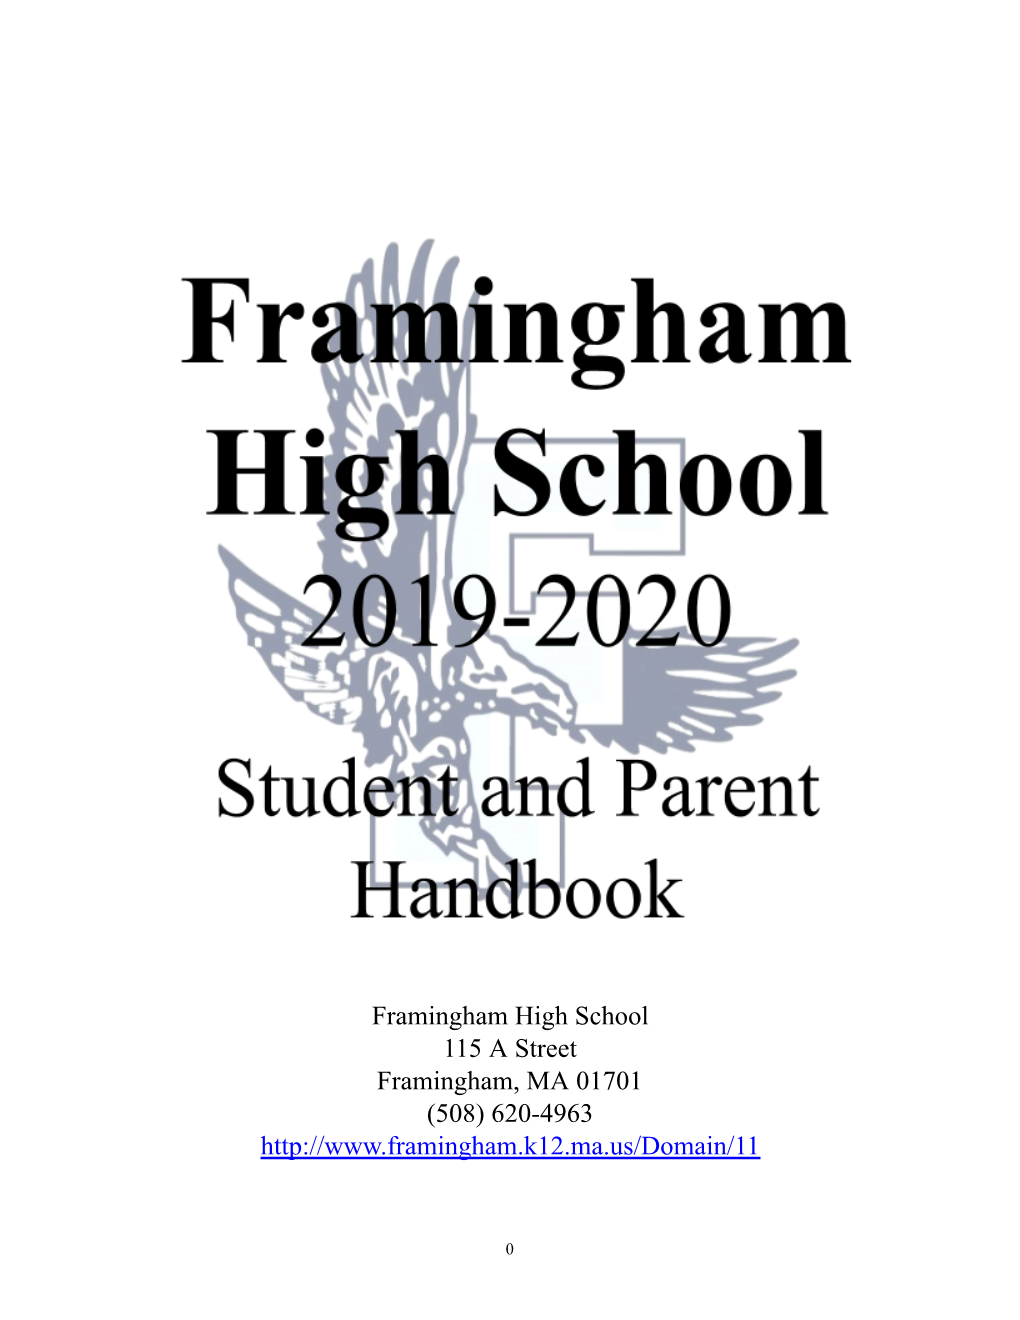 Framingham High School 115 a Street Framingham, MA 01701 (508) 620-4963